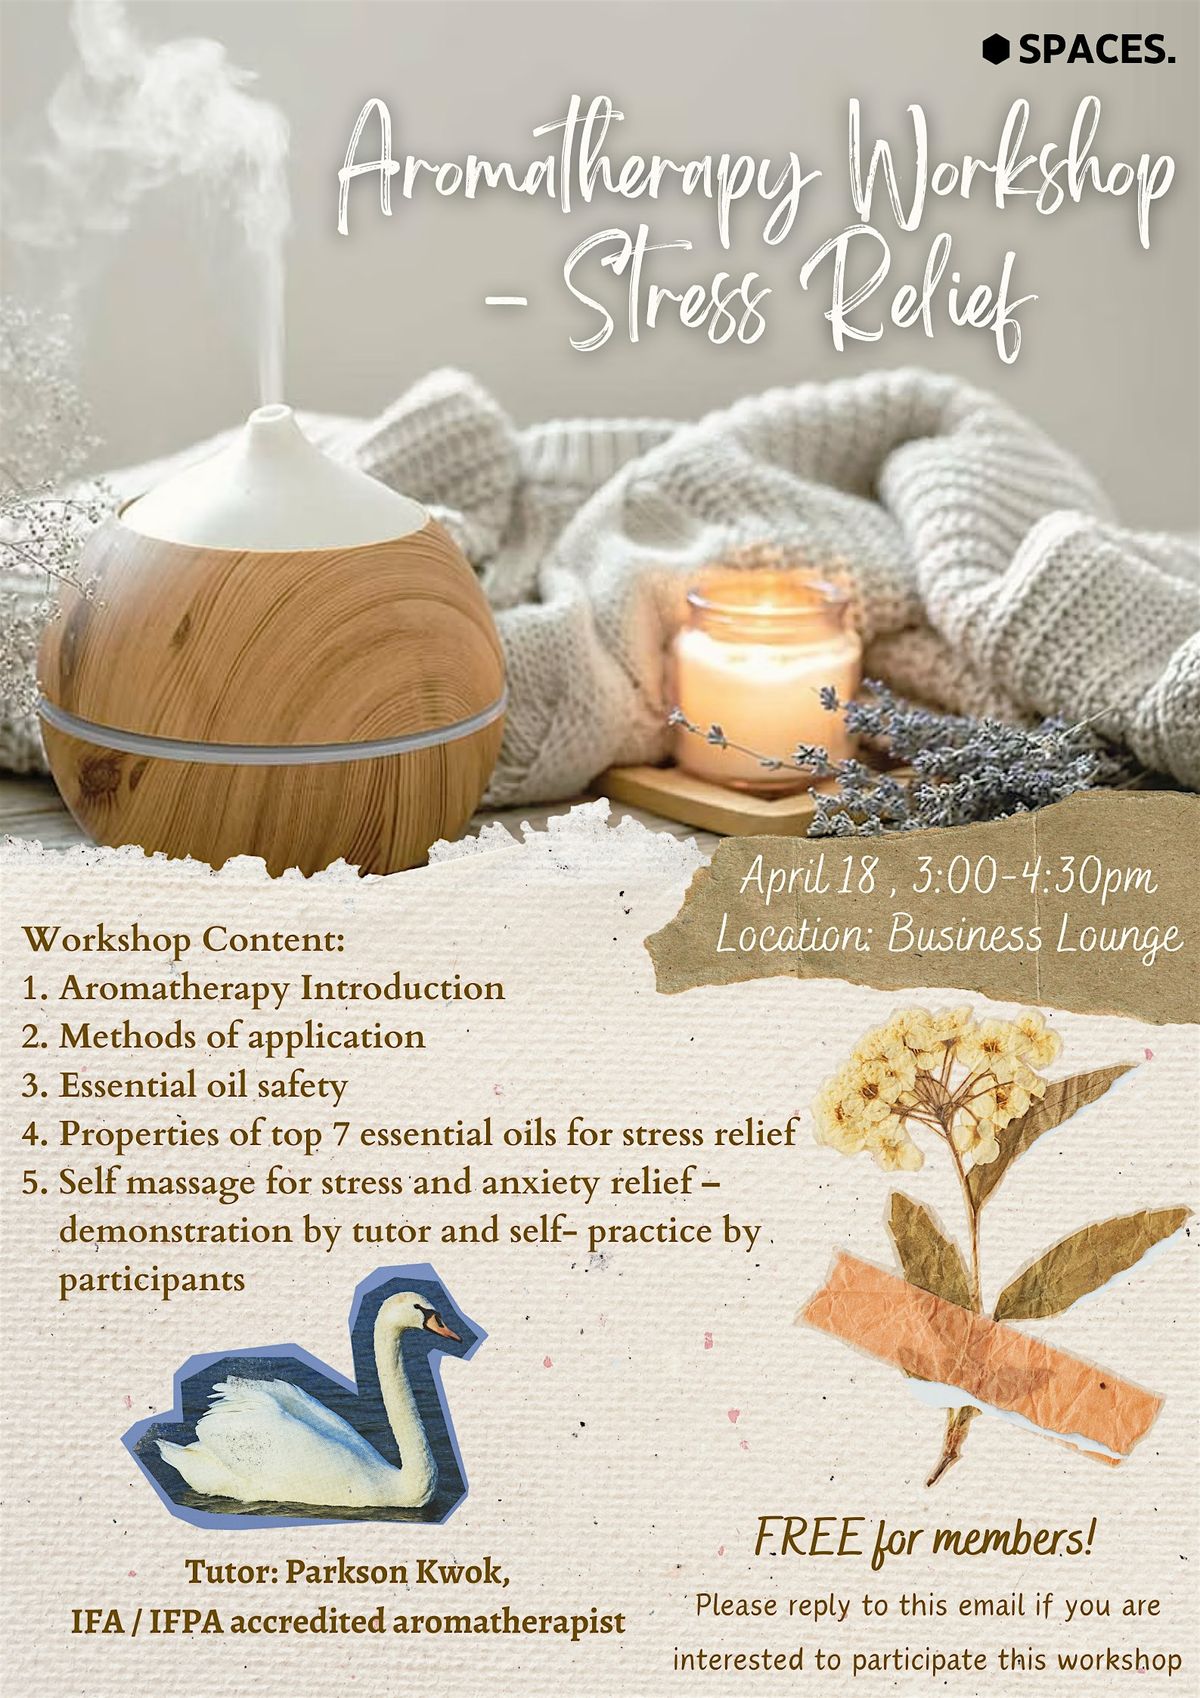 Aromatherapy Workshop - Stress Relief